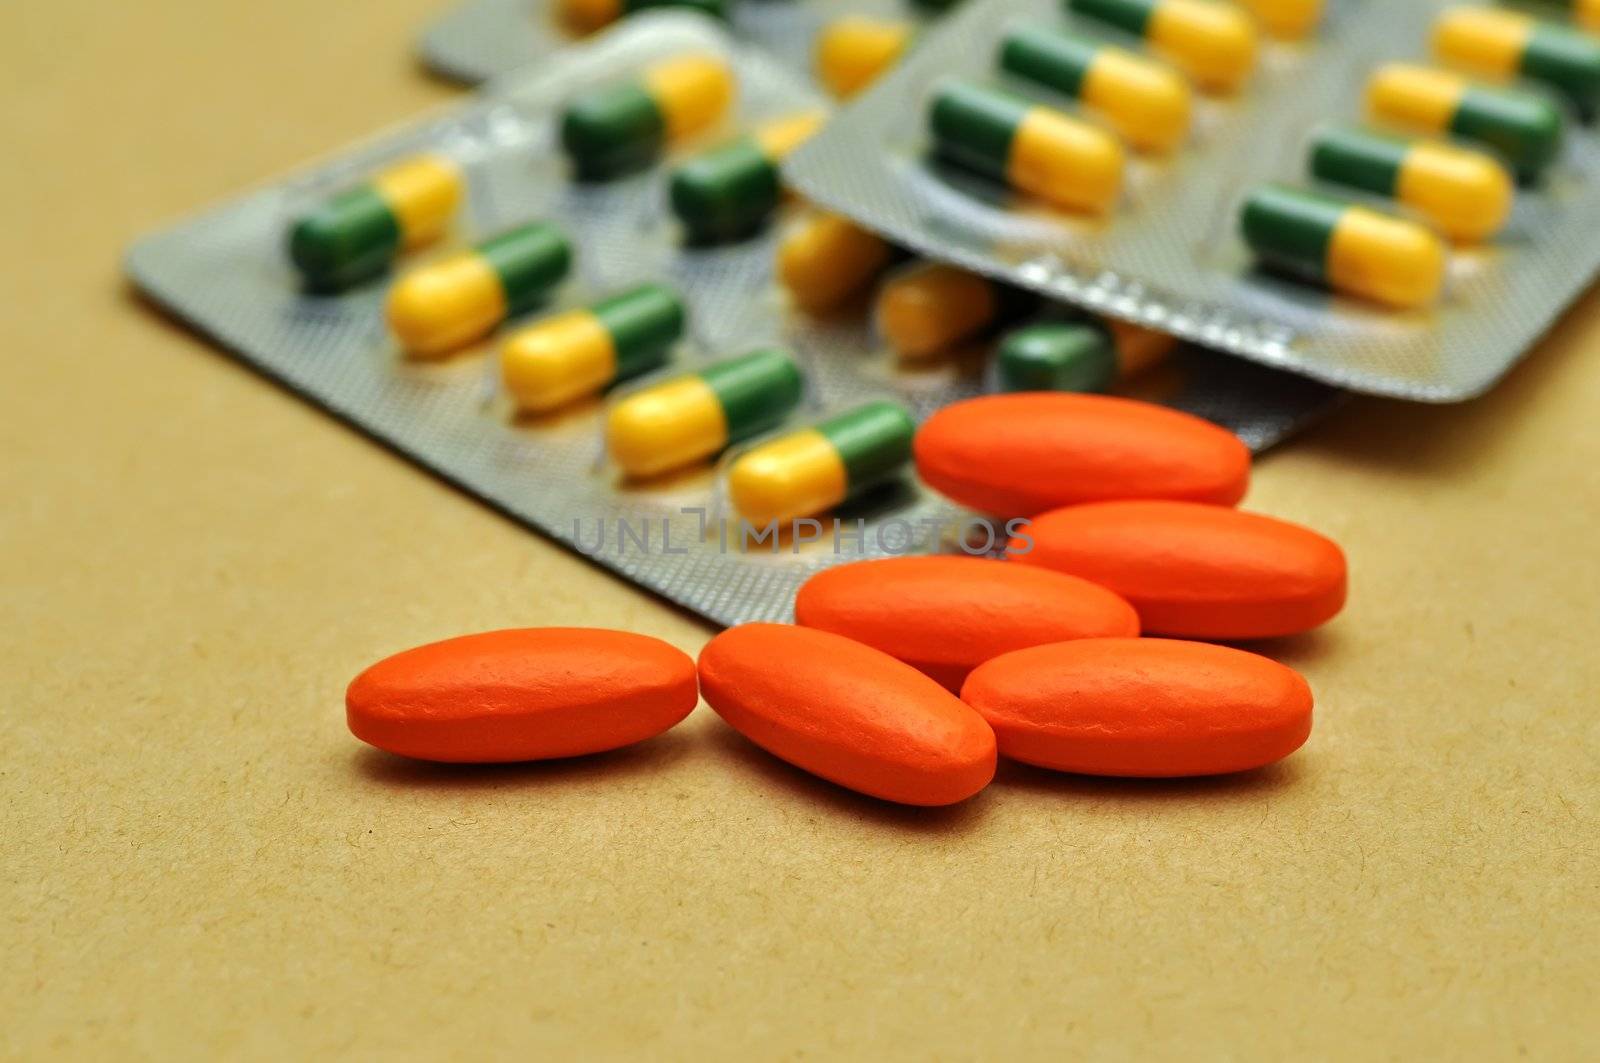 pills by phanlop88